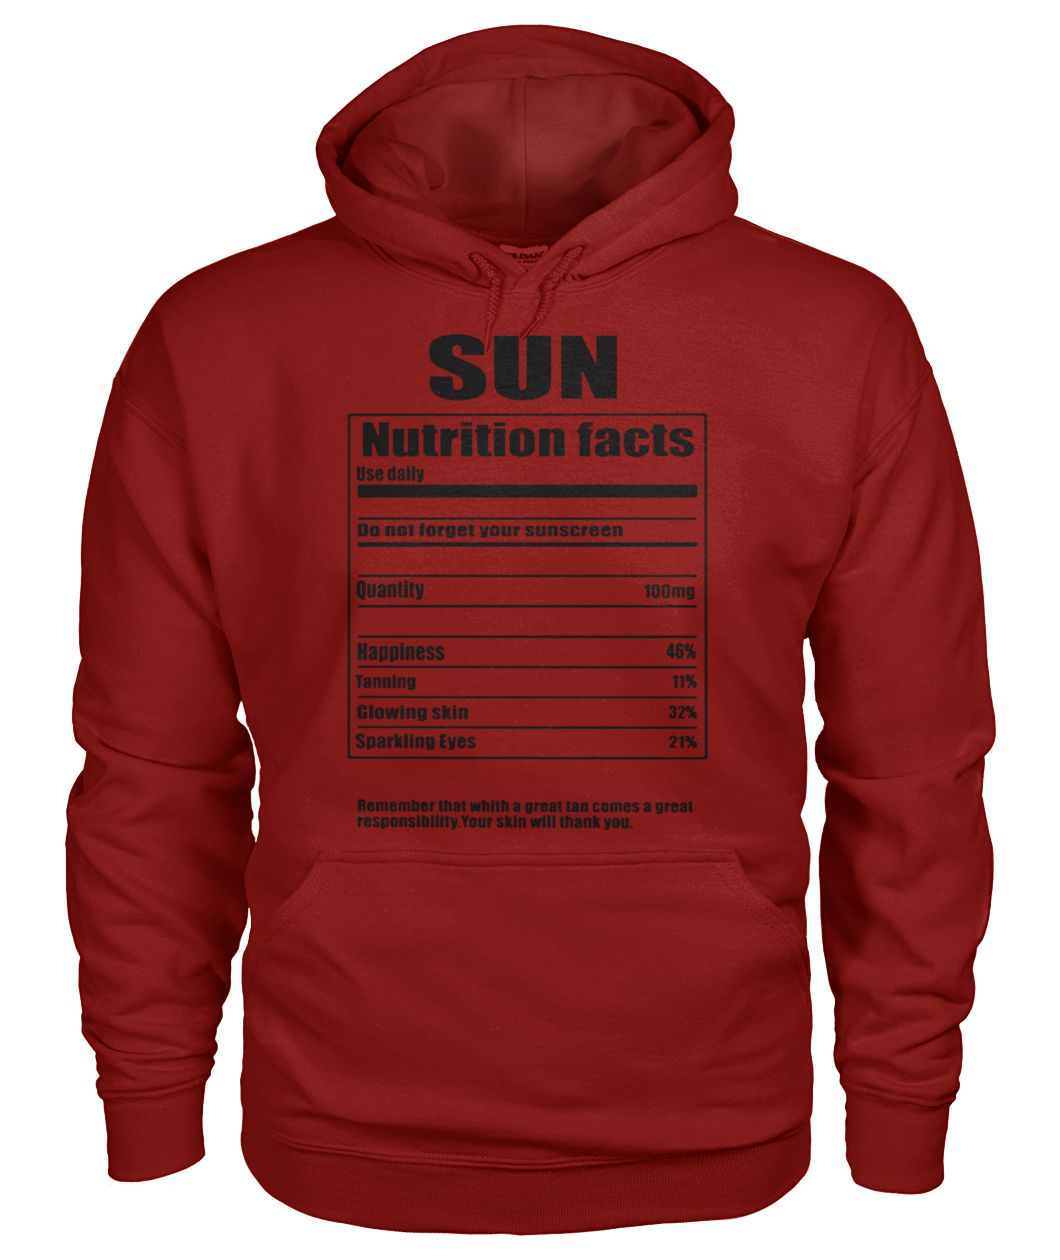 Sun nutrition facts label gildan hoodie